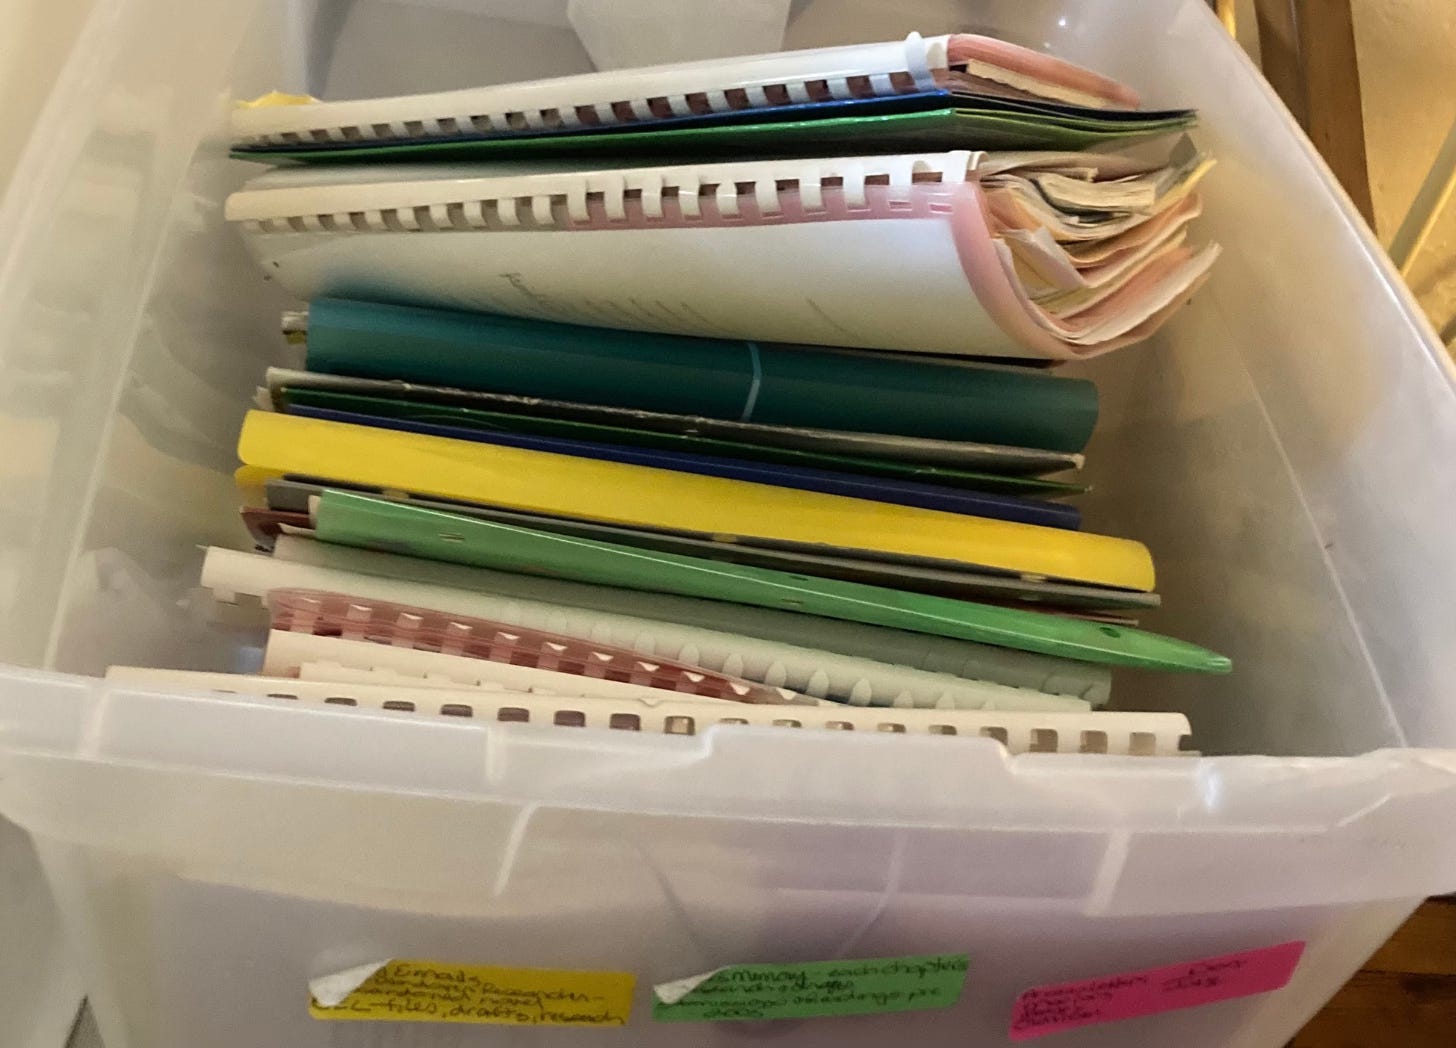 A plastic bin full of bulging file folders.